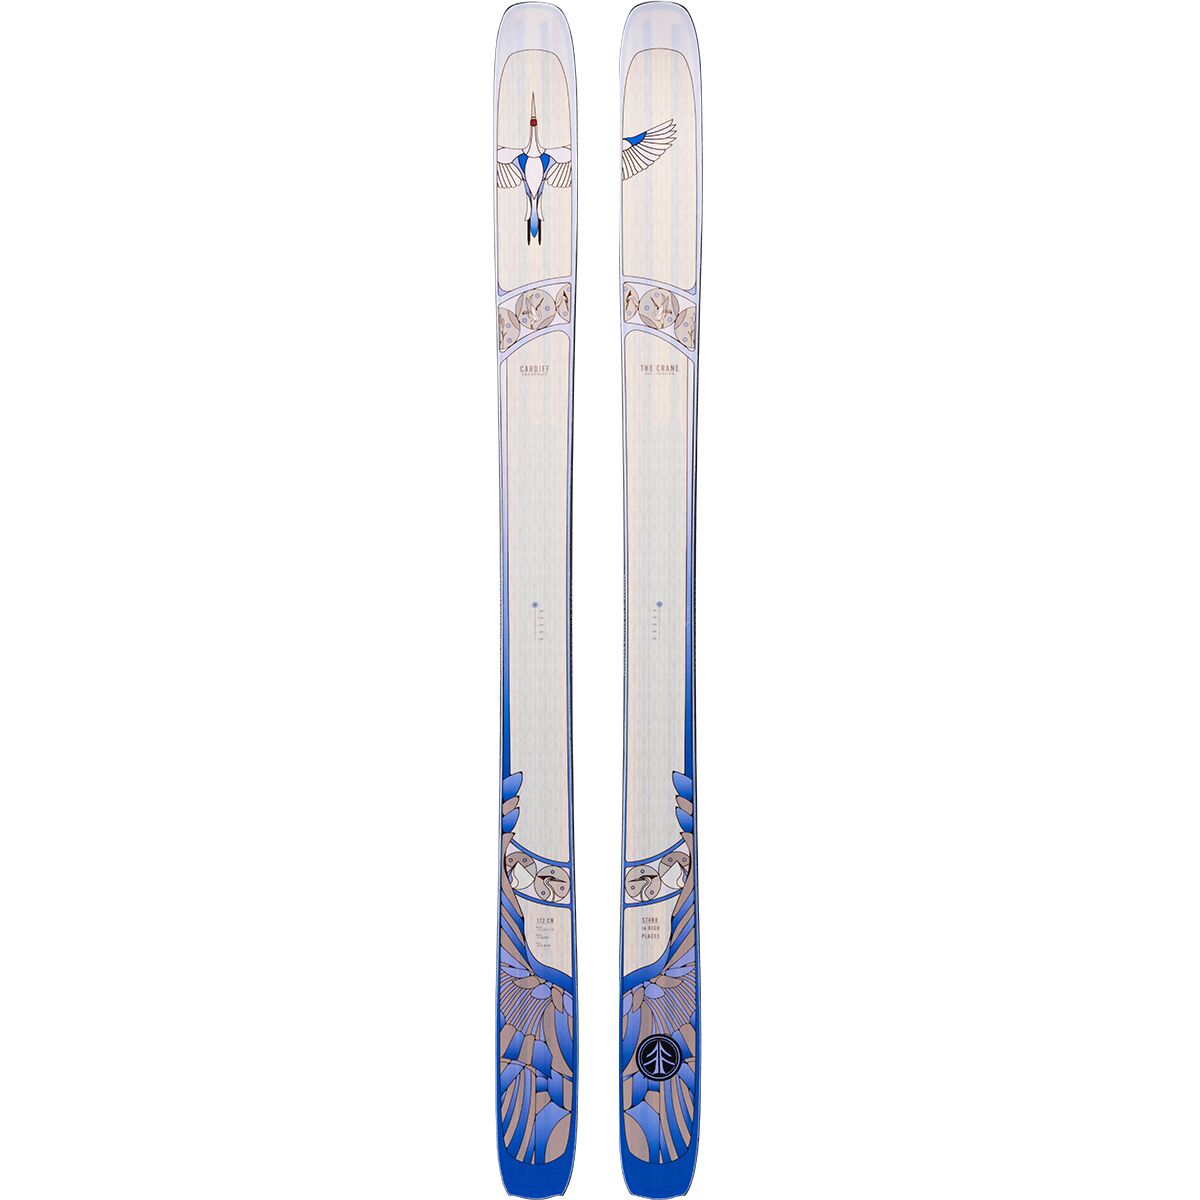 Cardiff Snowcraft Crane Ski Enduro